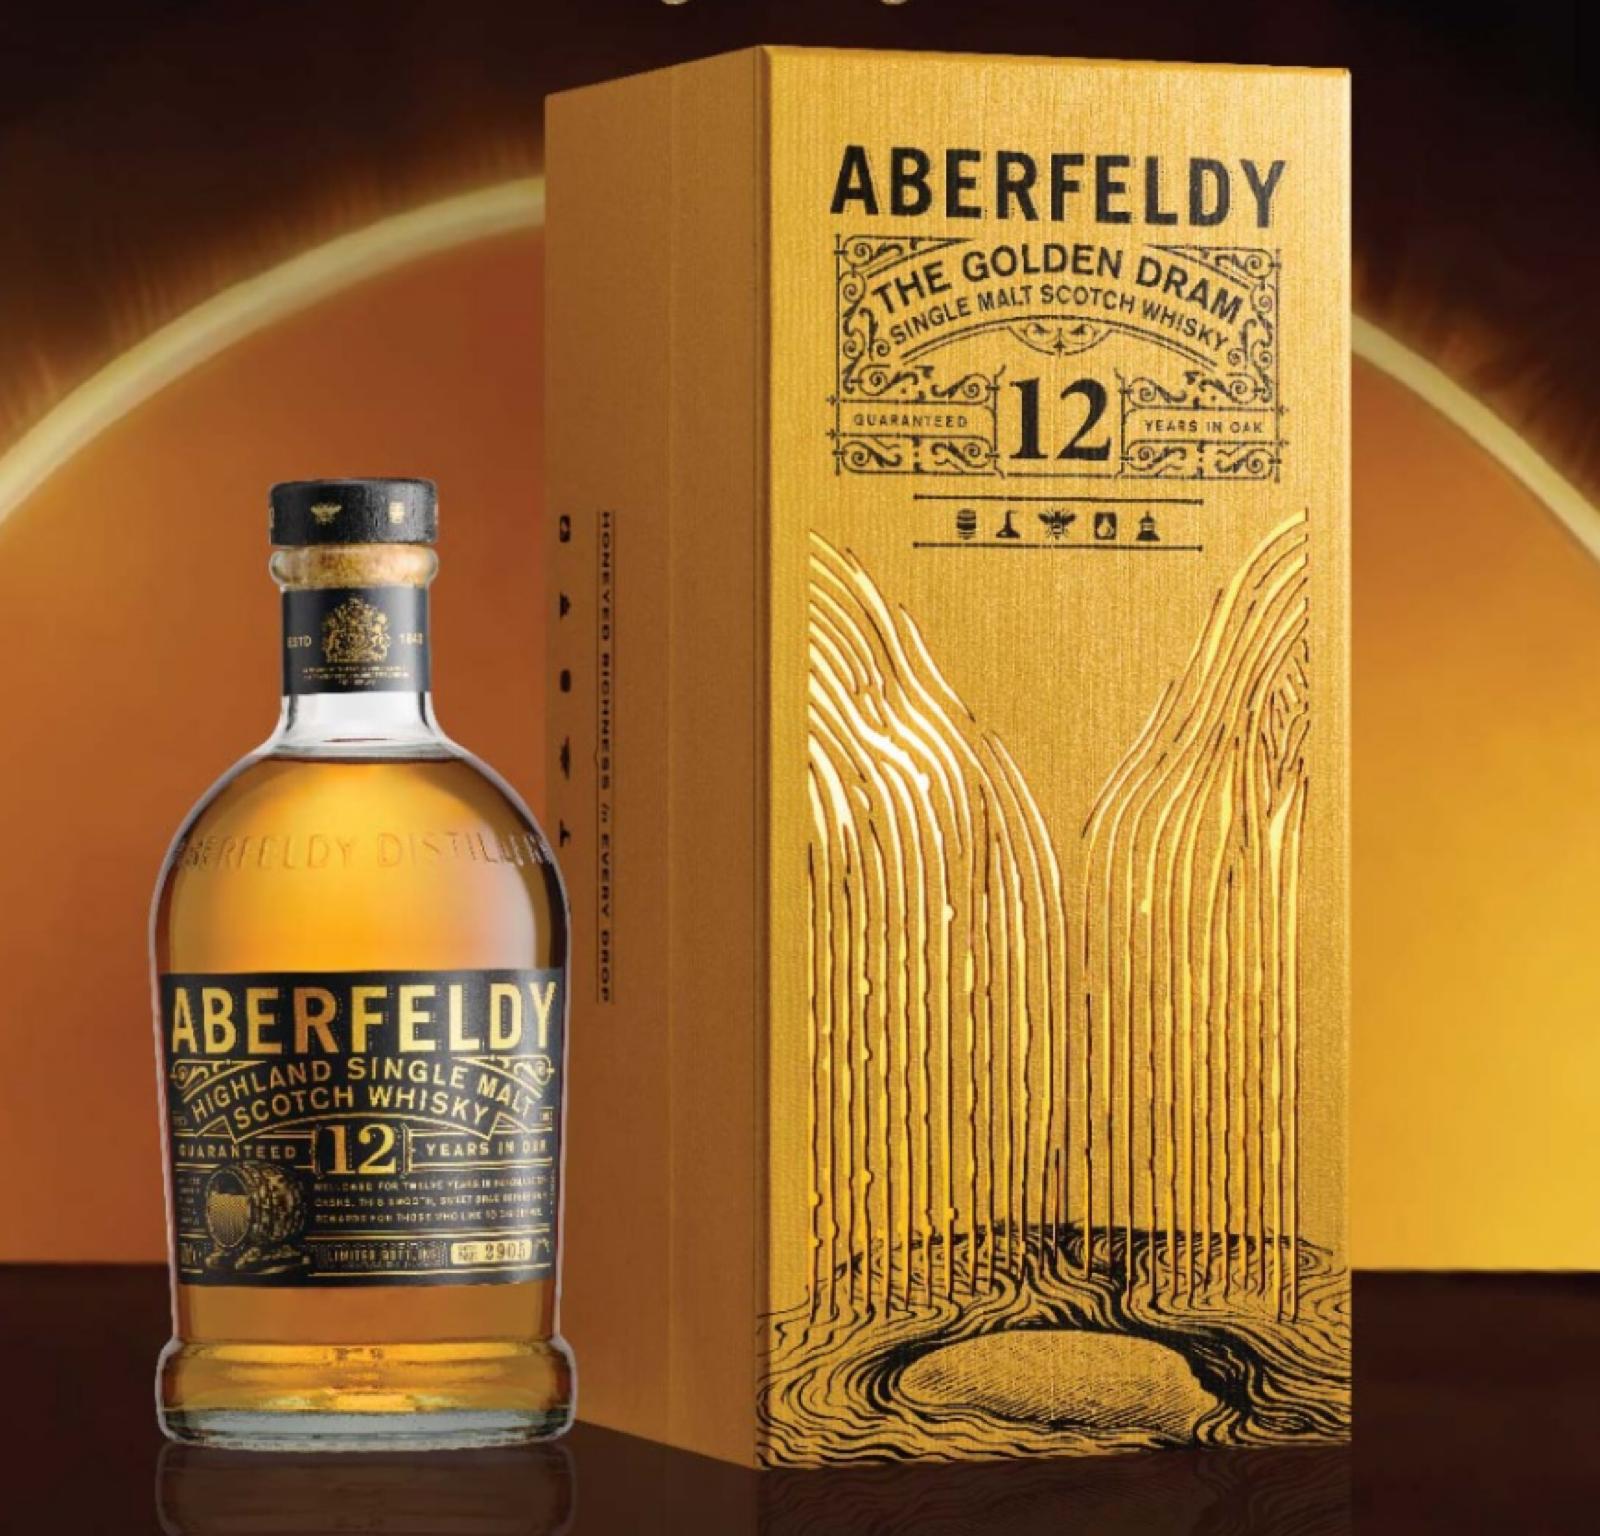 Aberfeldy 12 Year Old Scotch Whisky with Gift Box (限量透光禮盒)